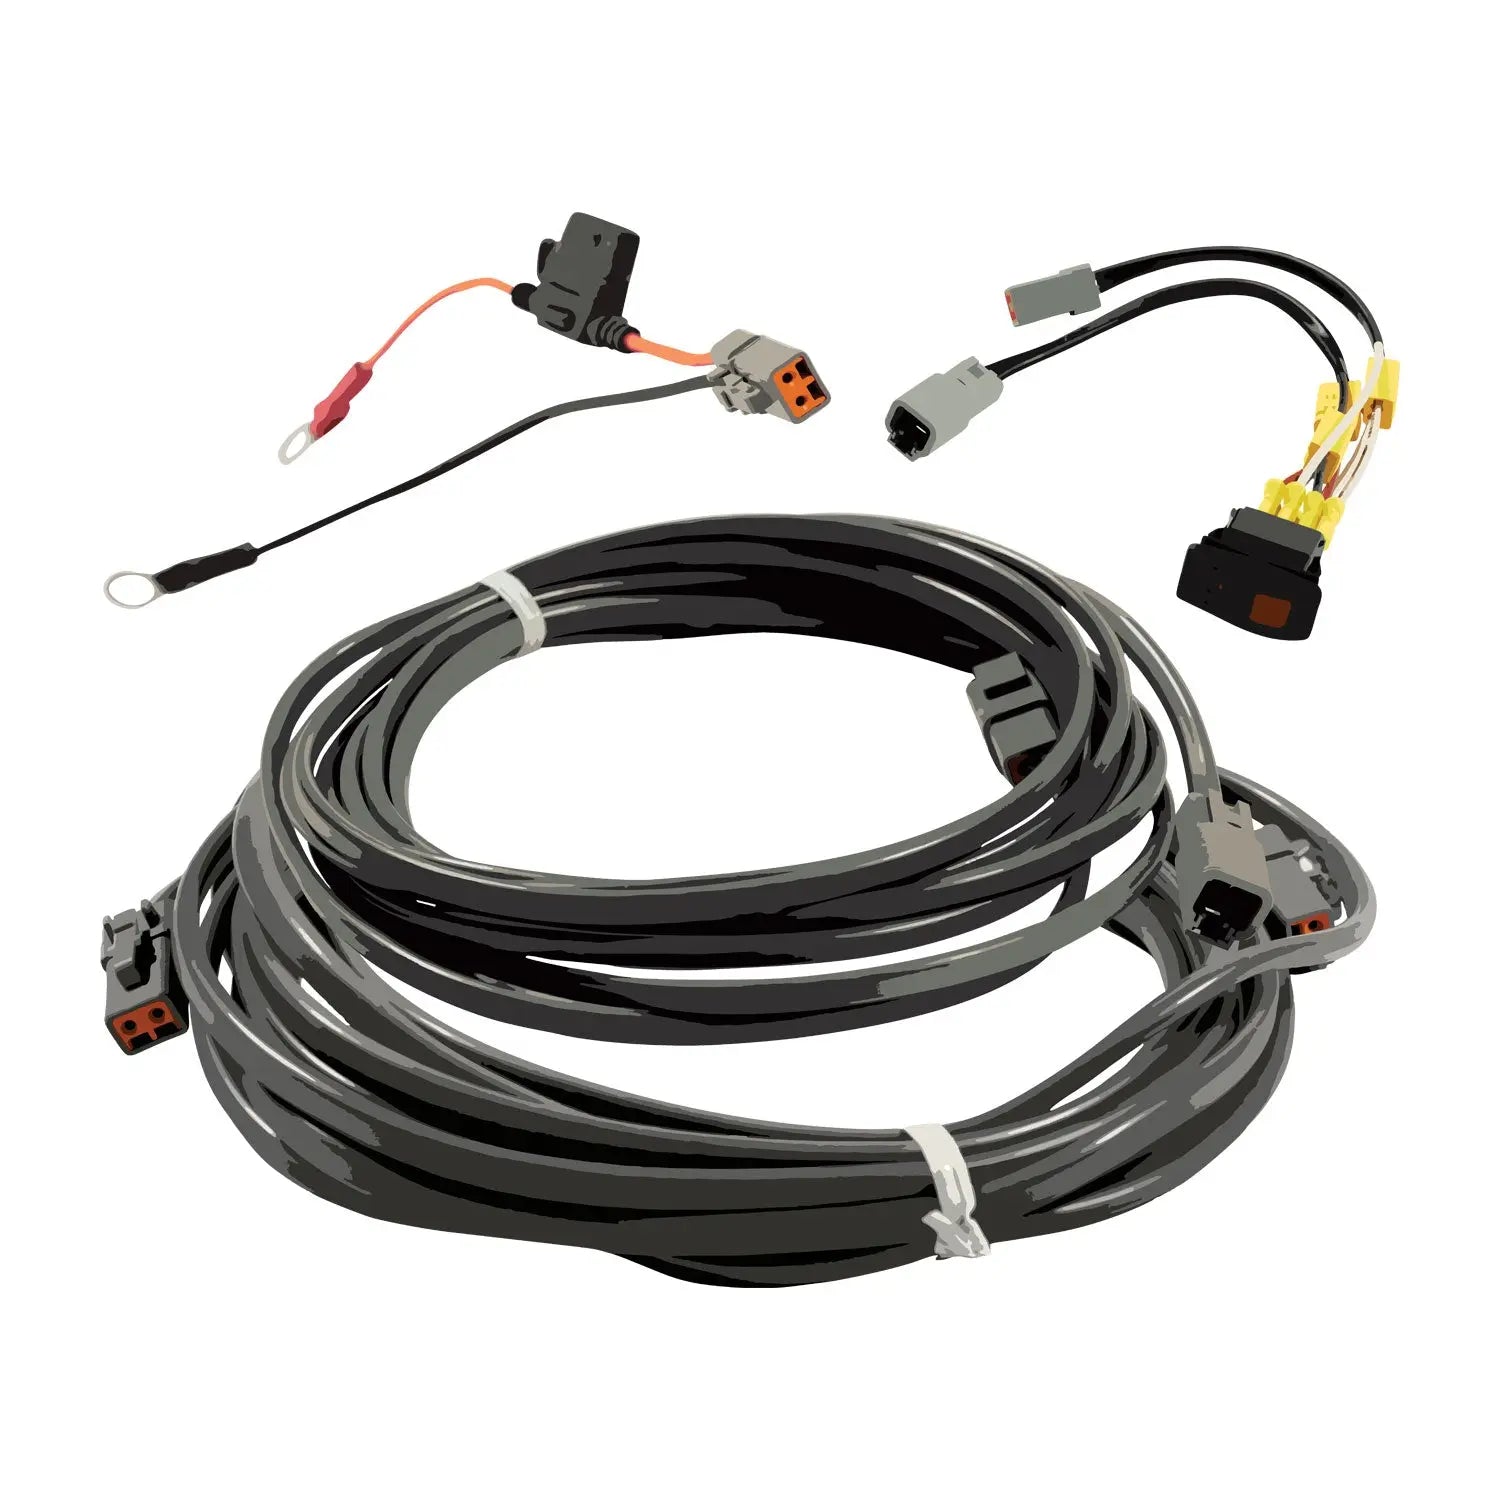 Complete Wire Harness Kit for Ballast Pumps - Fatsac Fatsac